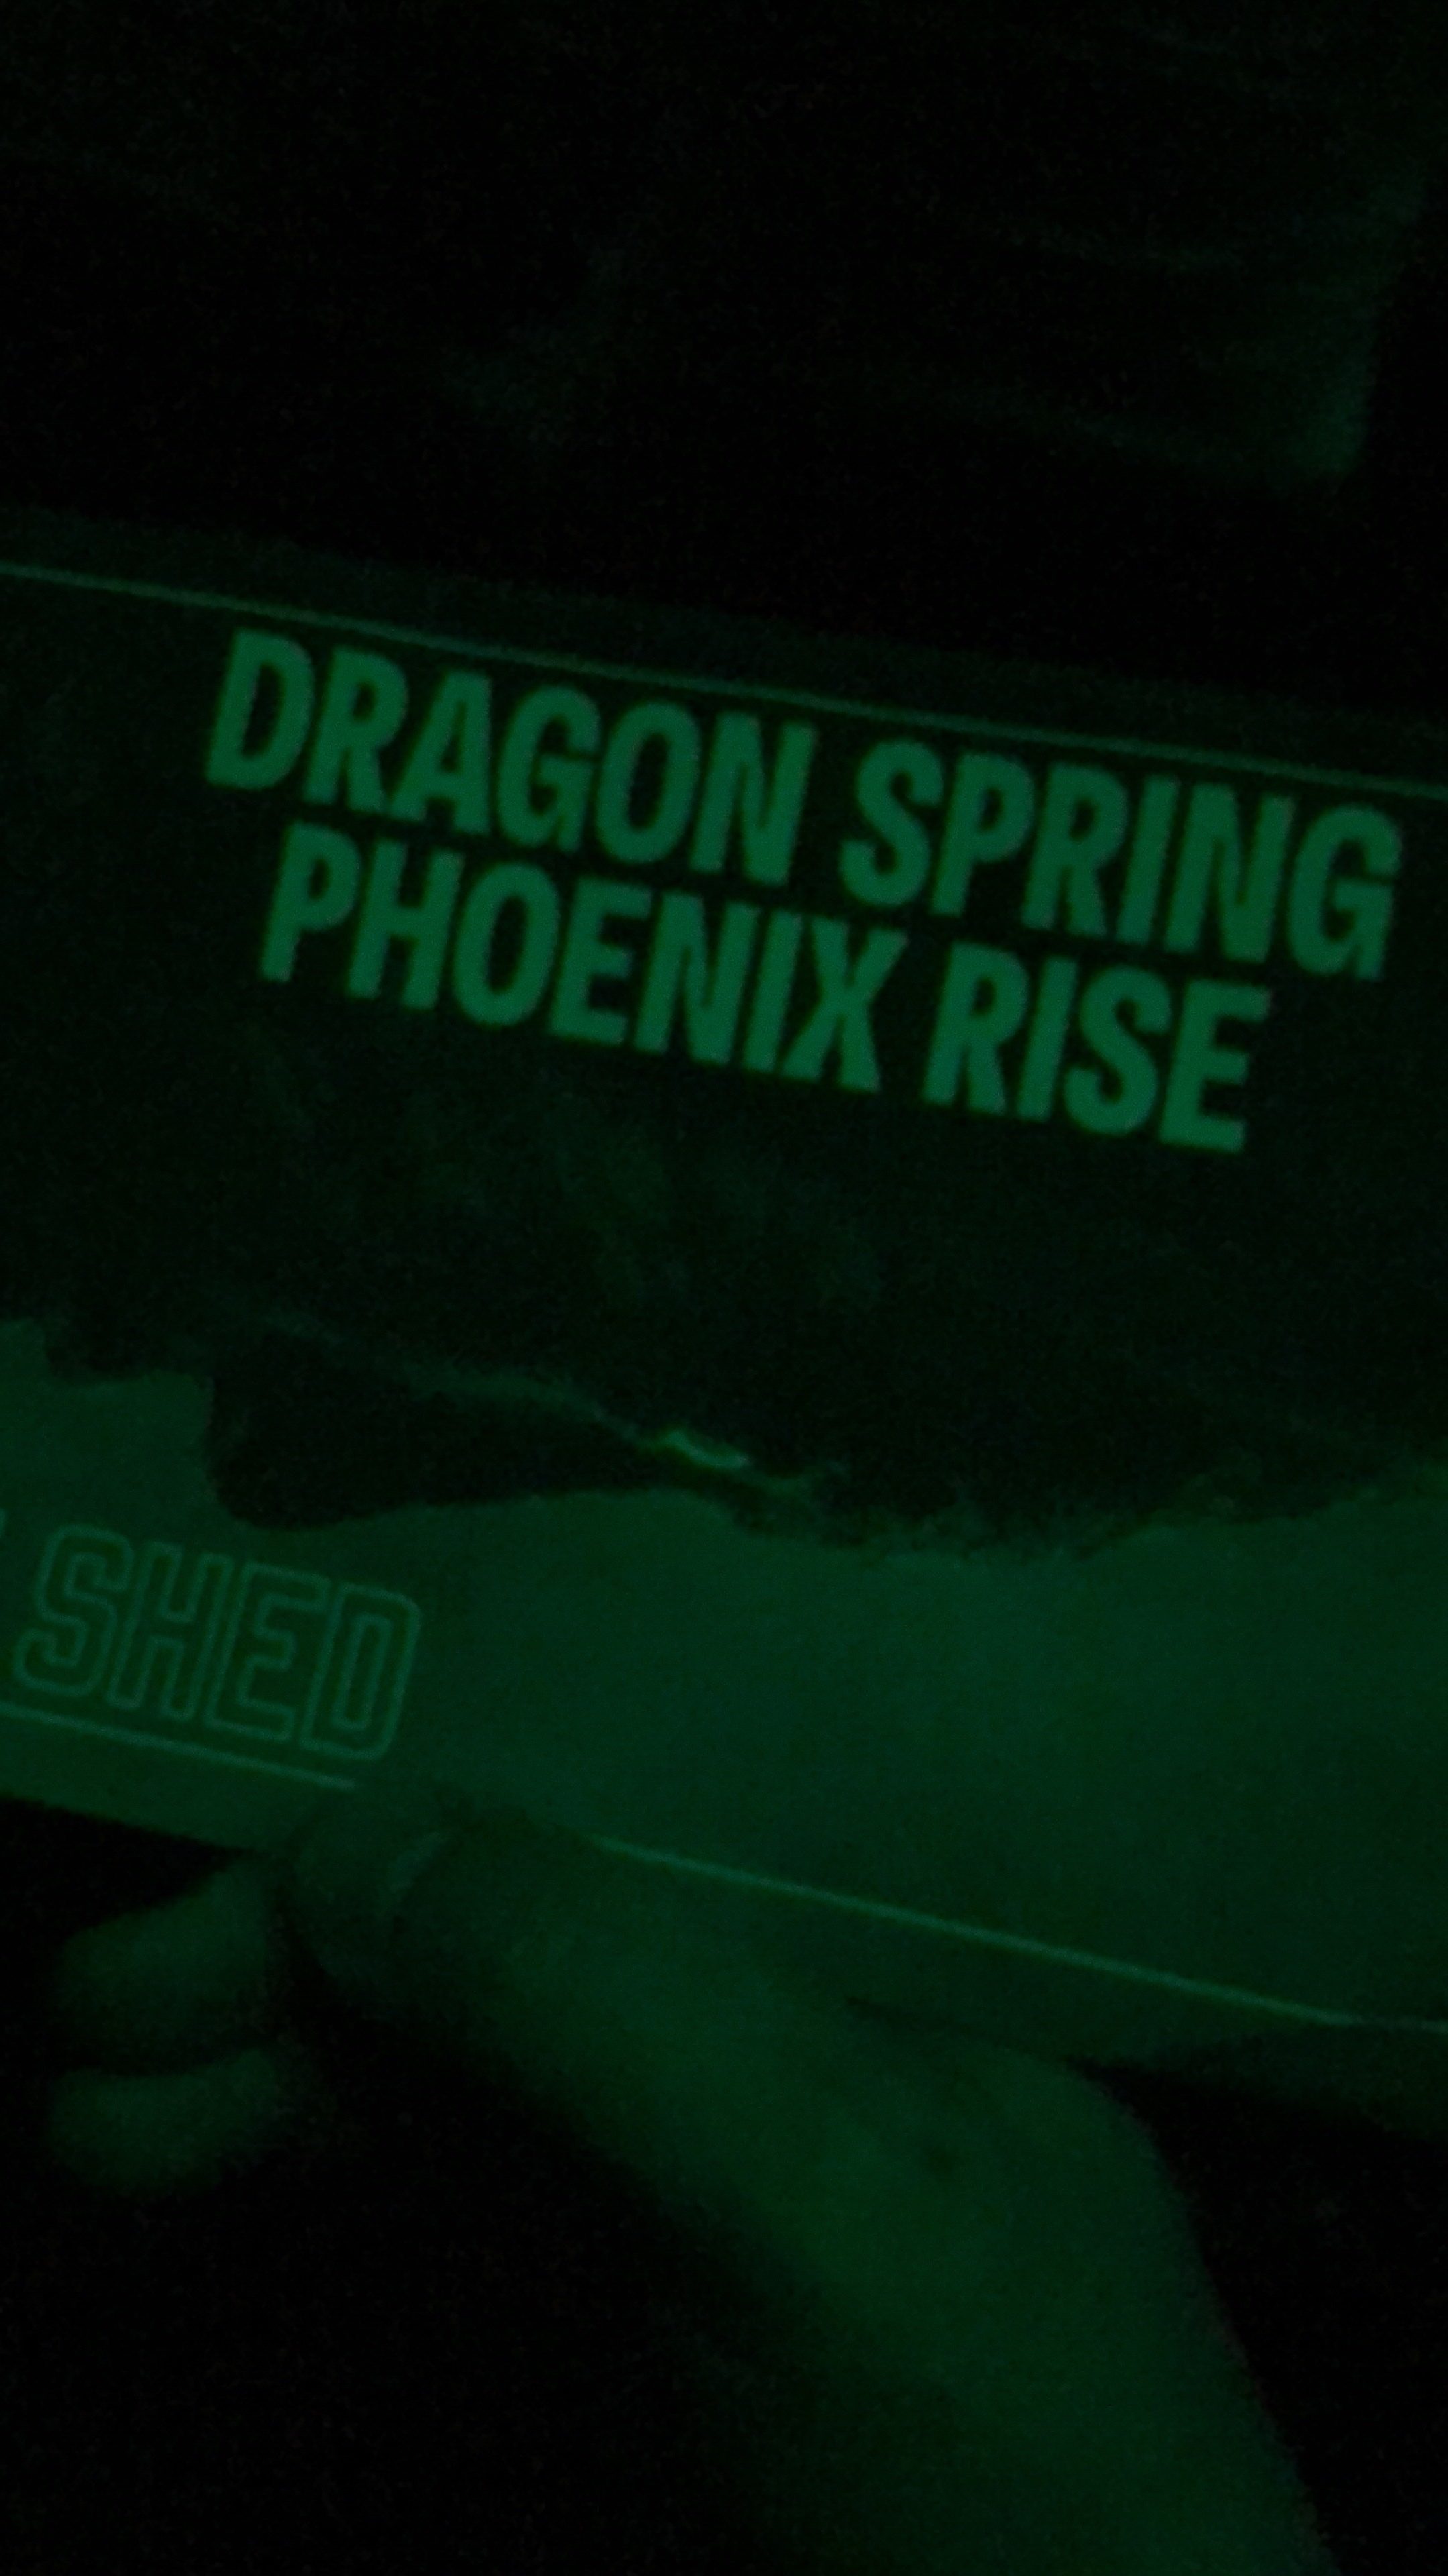 dragon spring phoenix rise tickets